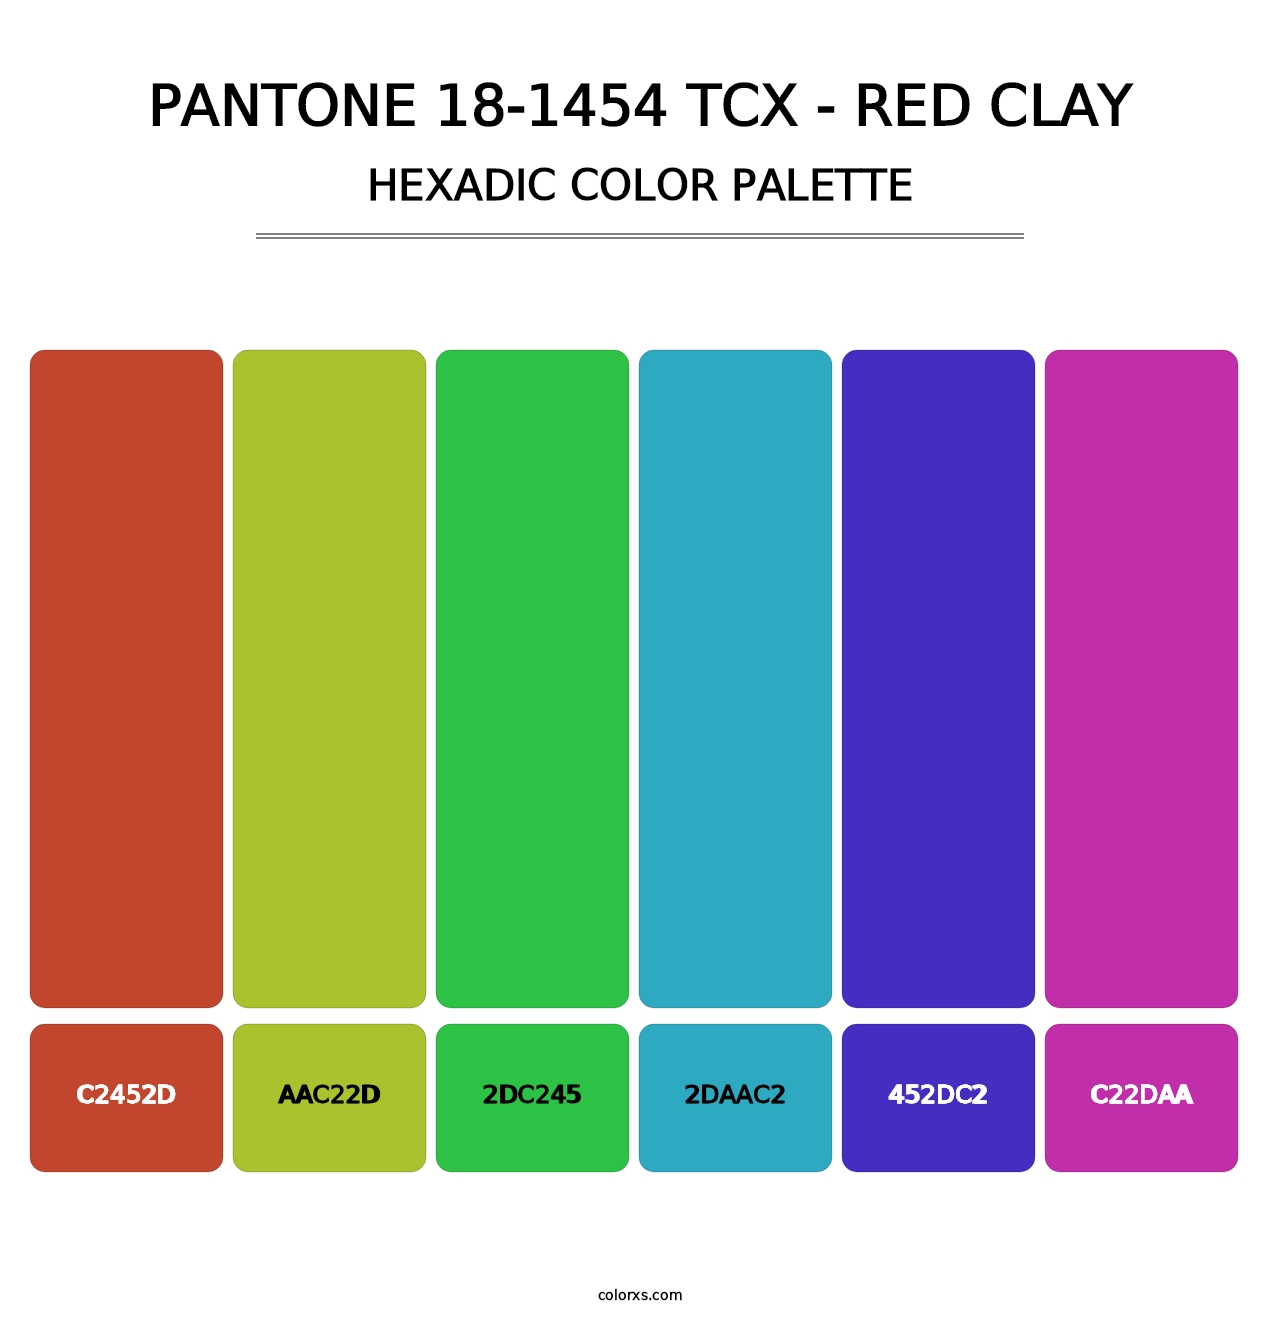 PANTONE 18-1454 TCX - Red Clay - Hexadic Color Palette